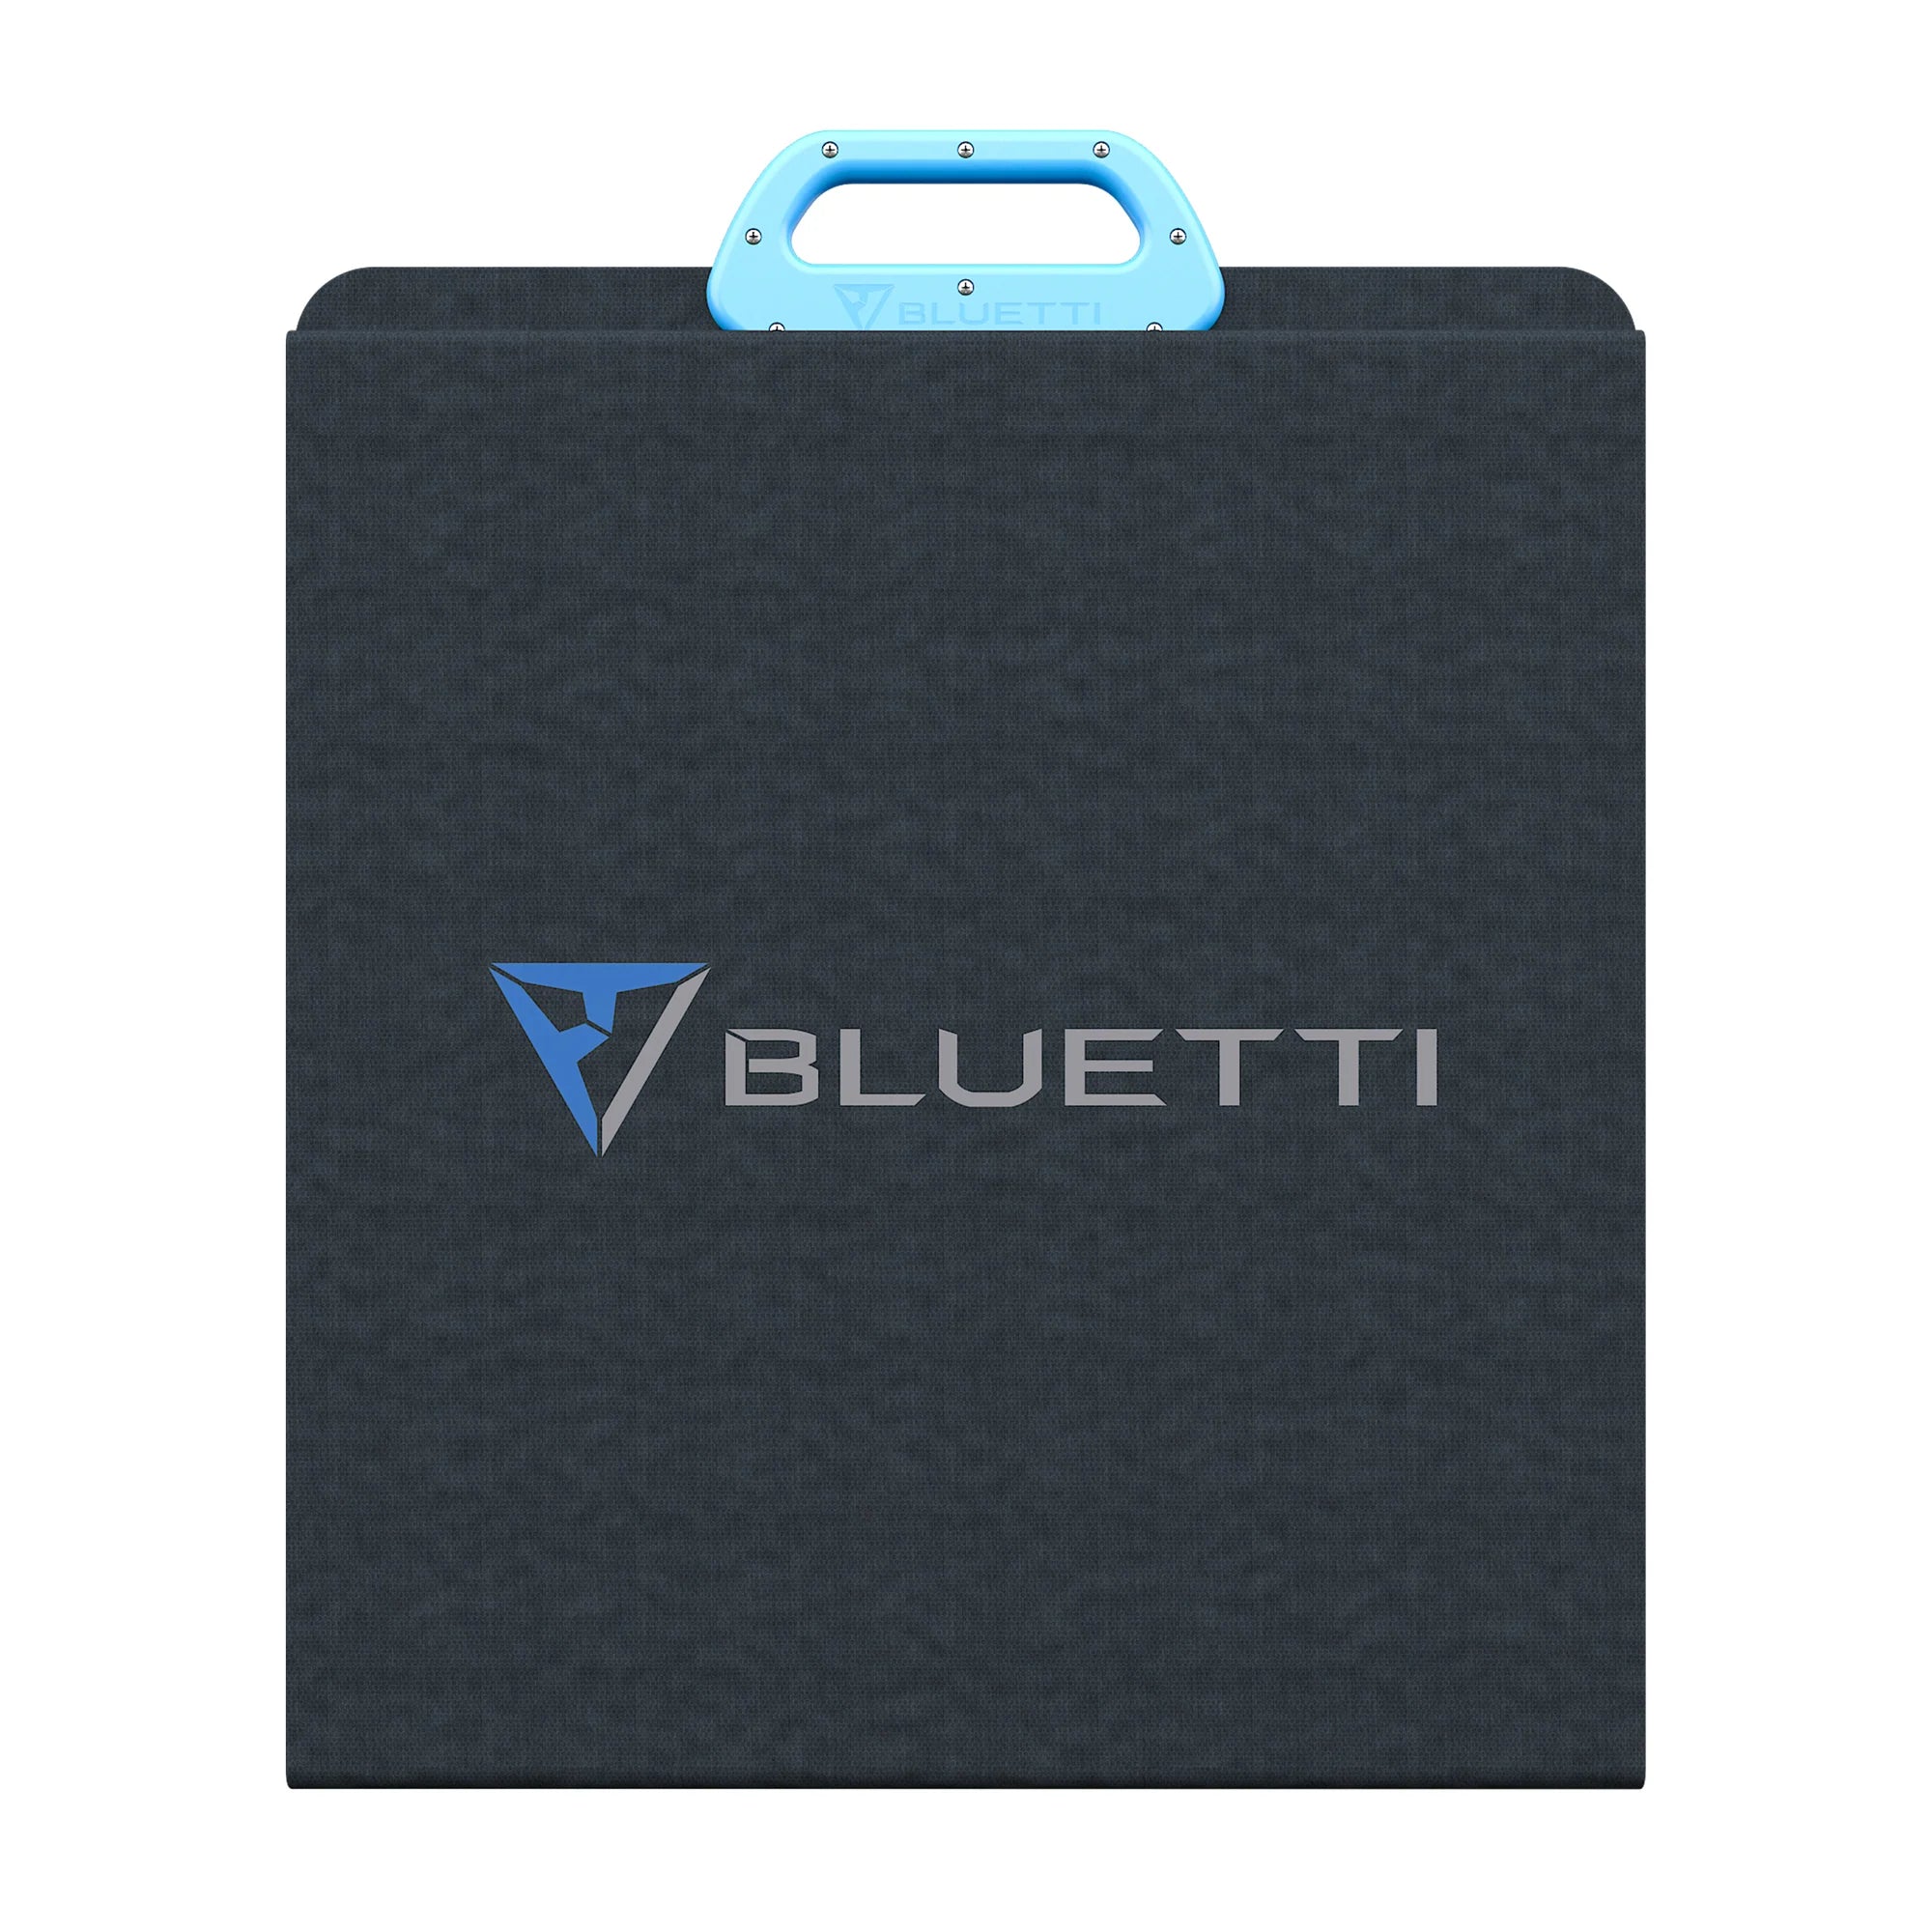 Bluetti PV200 Portable Solar Panel - Powerful Solar Energy for Outdoor Adventures